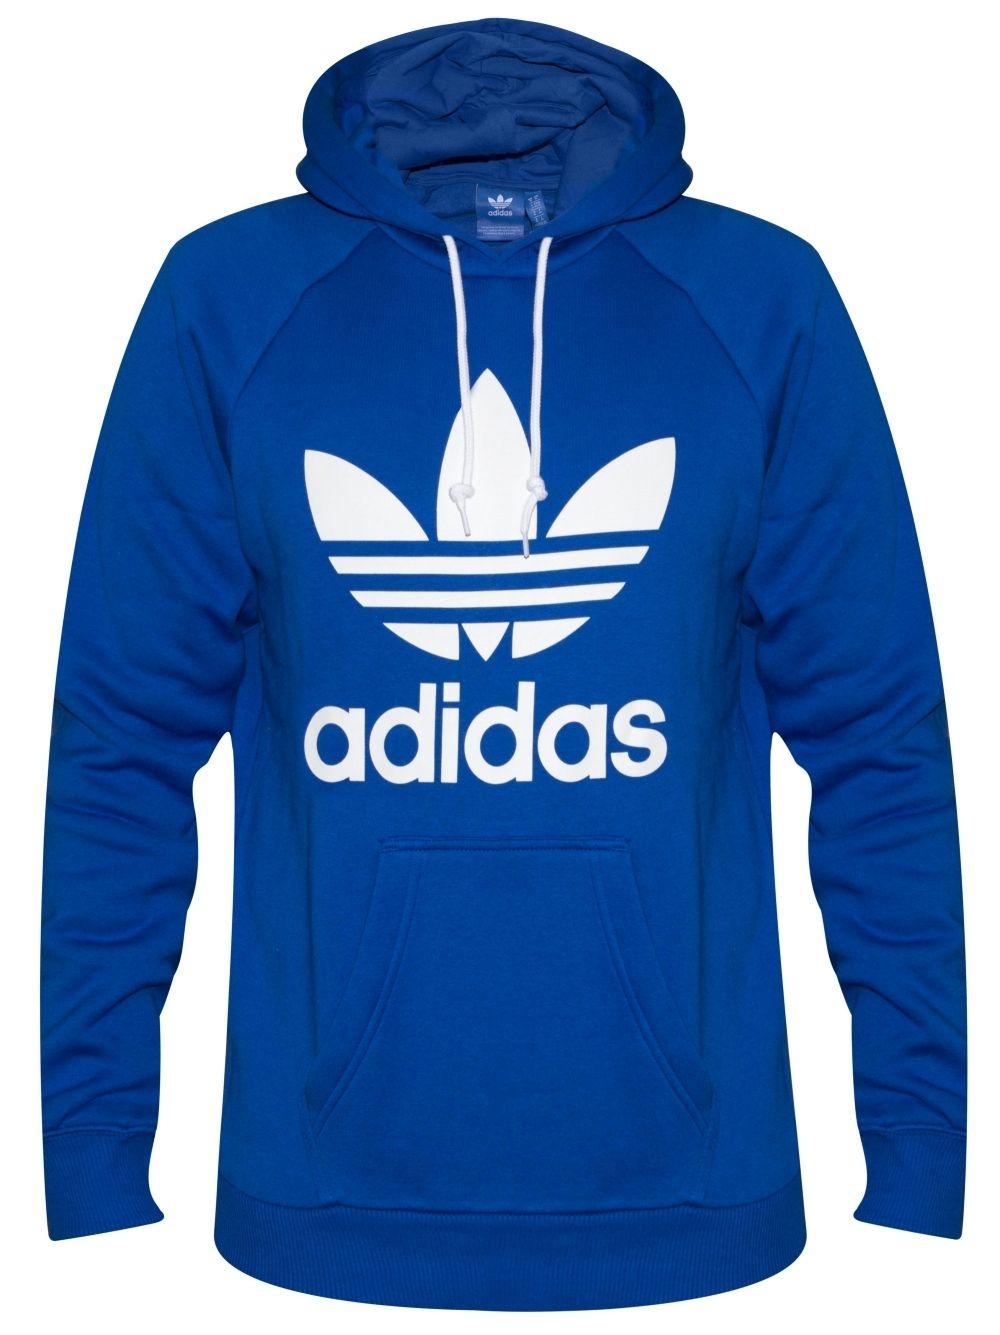 Blue and White Adidas Logo - Adidas Originals Royal Blue & White Hooded Sweatshirt | Designerwear